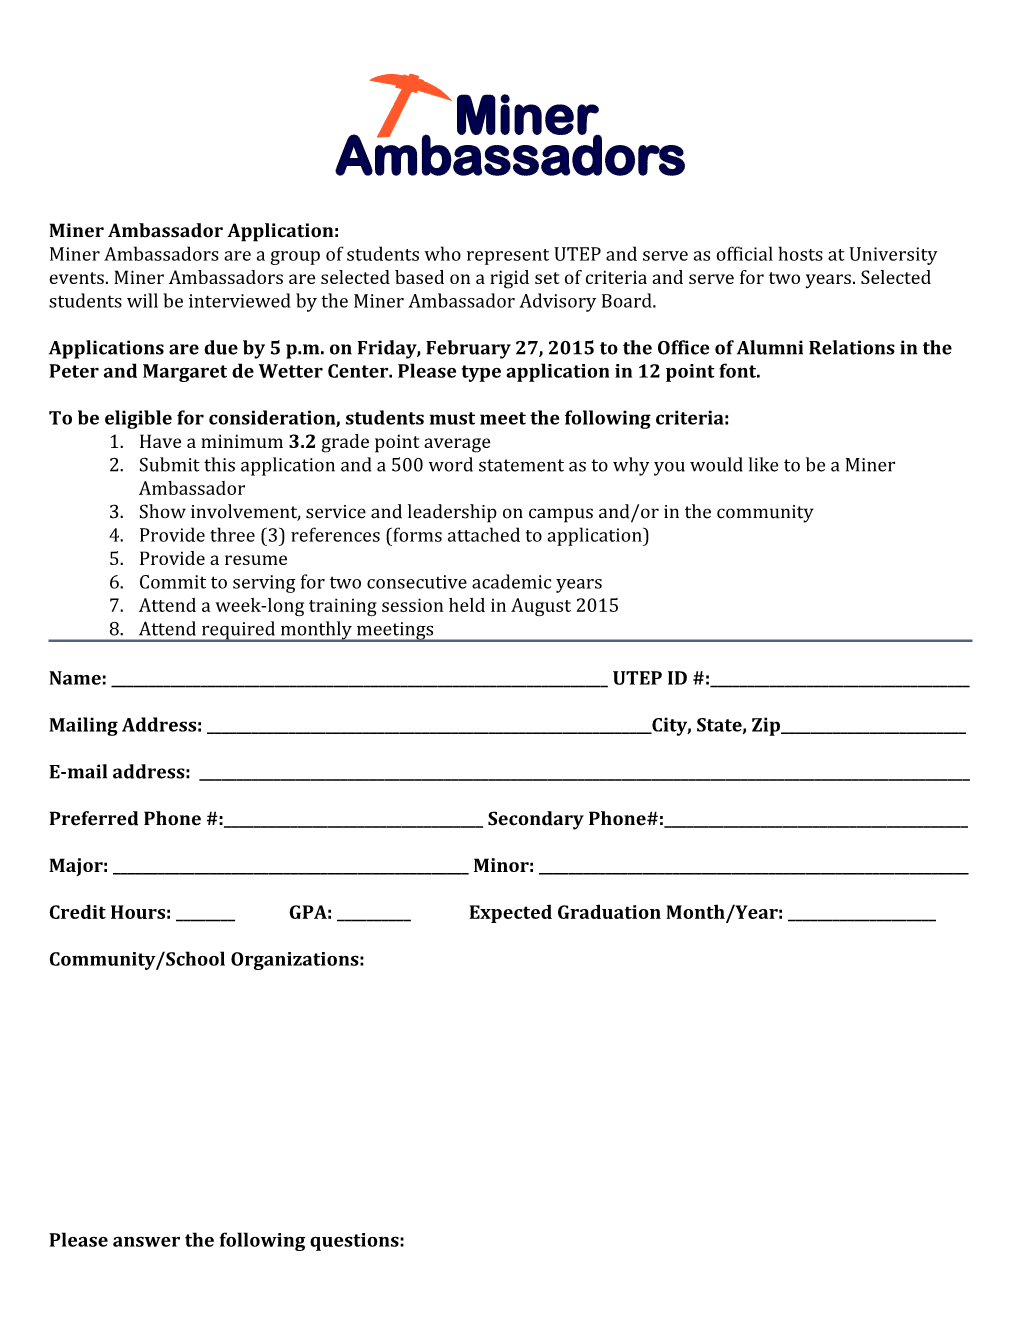 Miner Ambassador Application